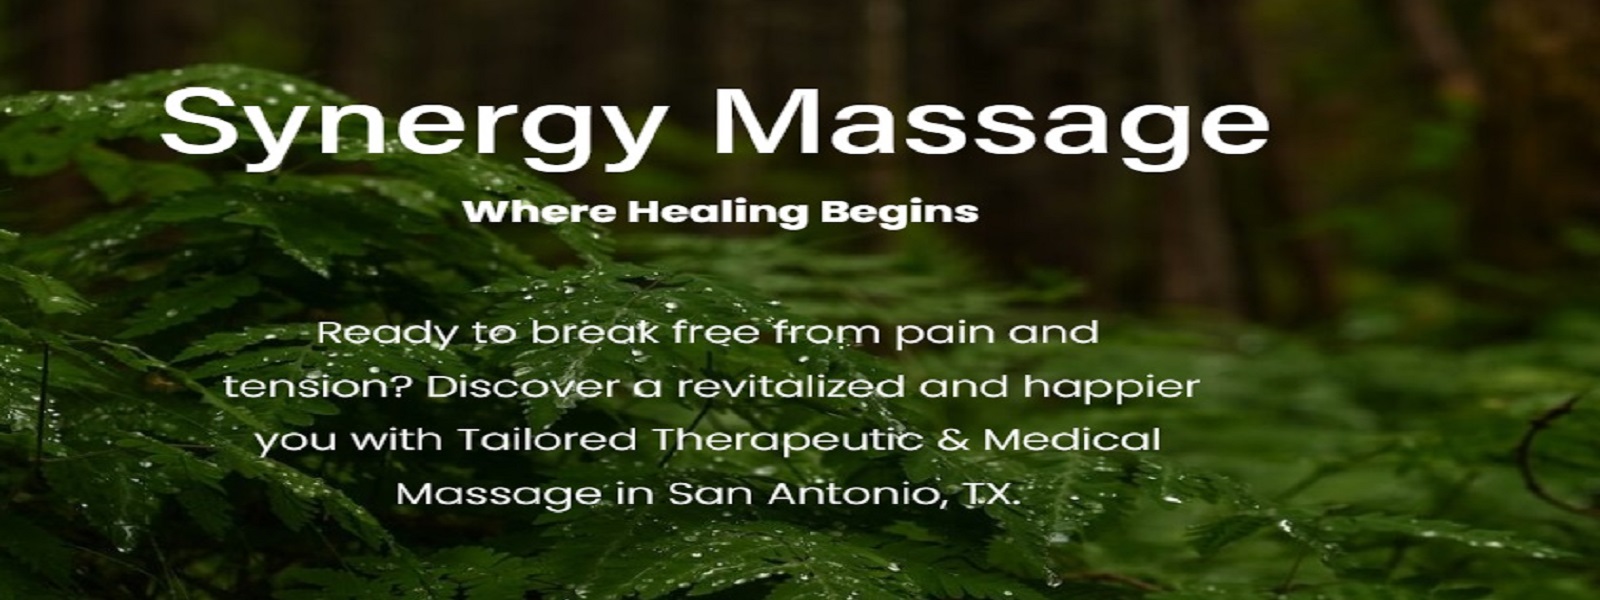 Synergy Massage Cover Image